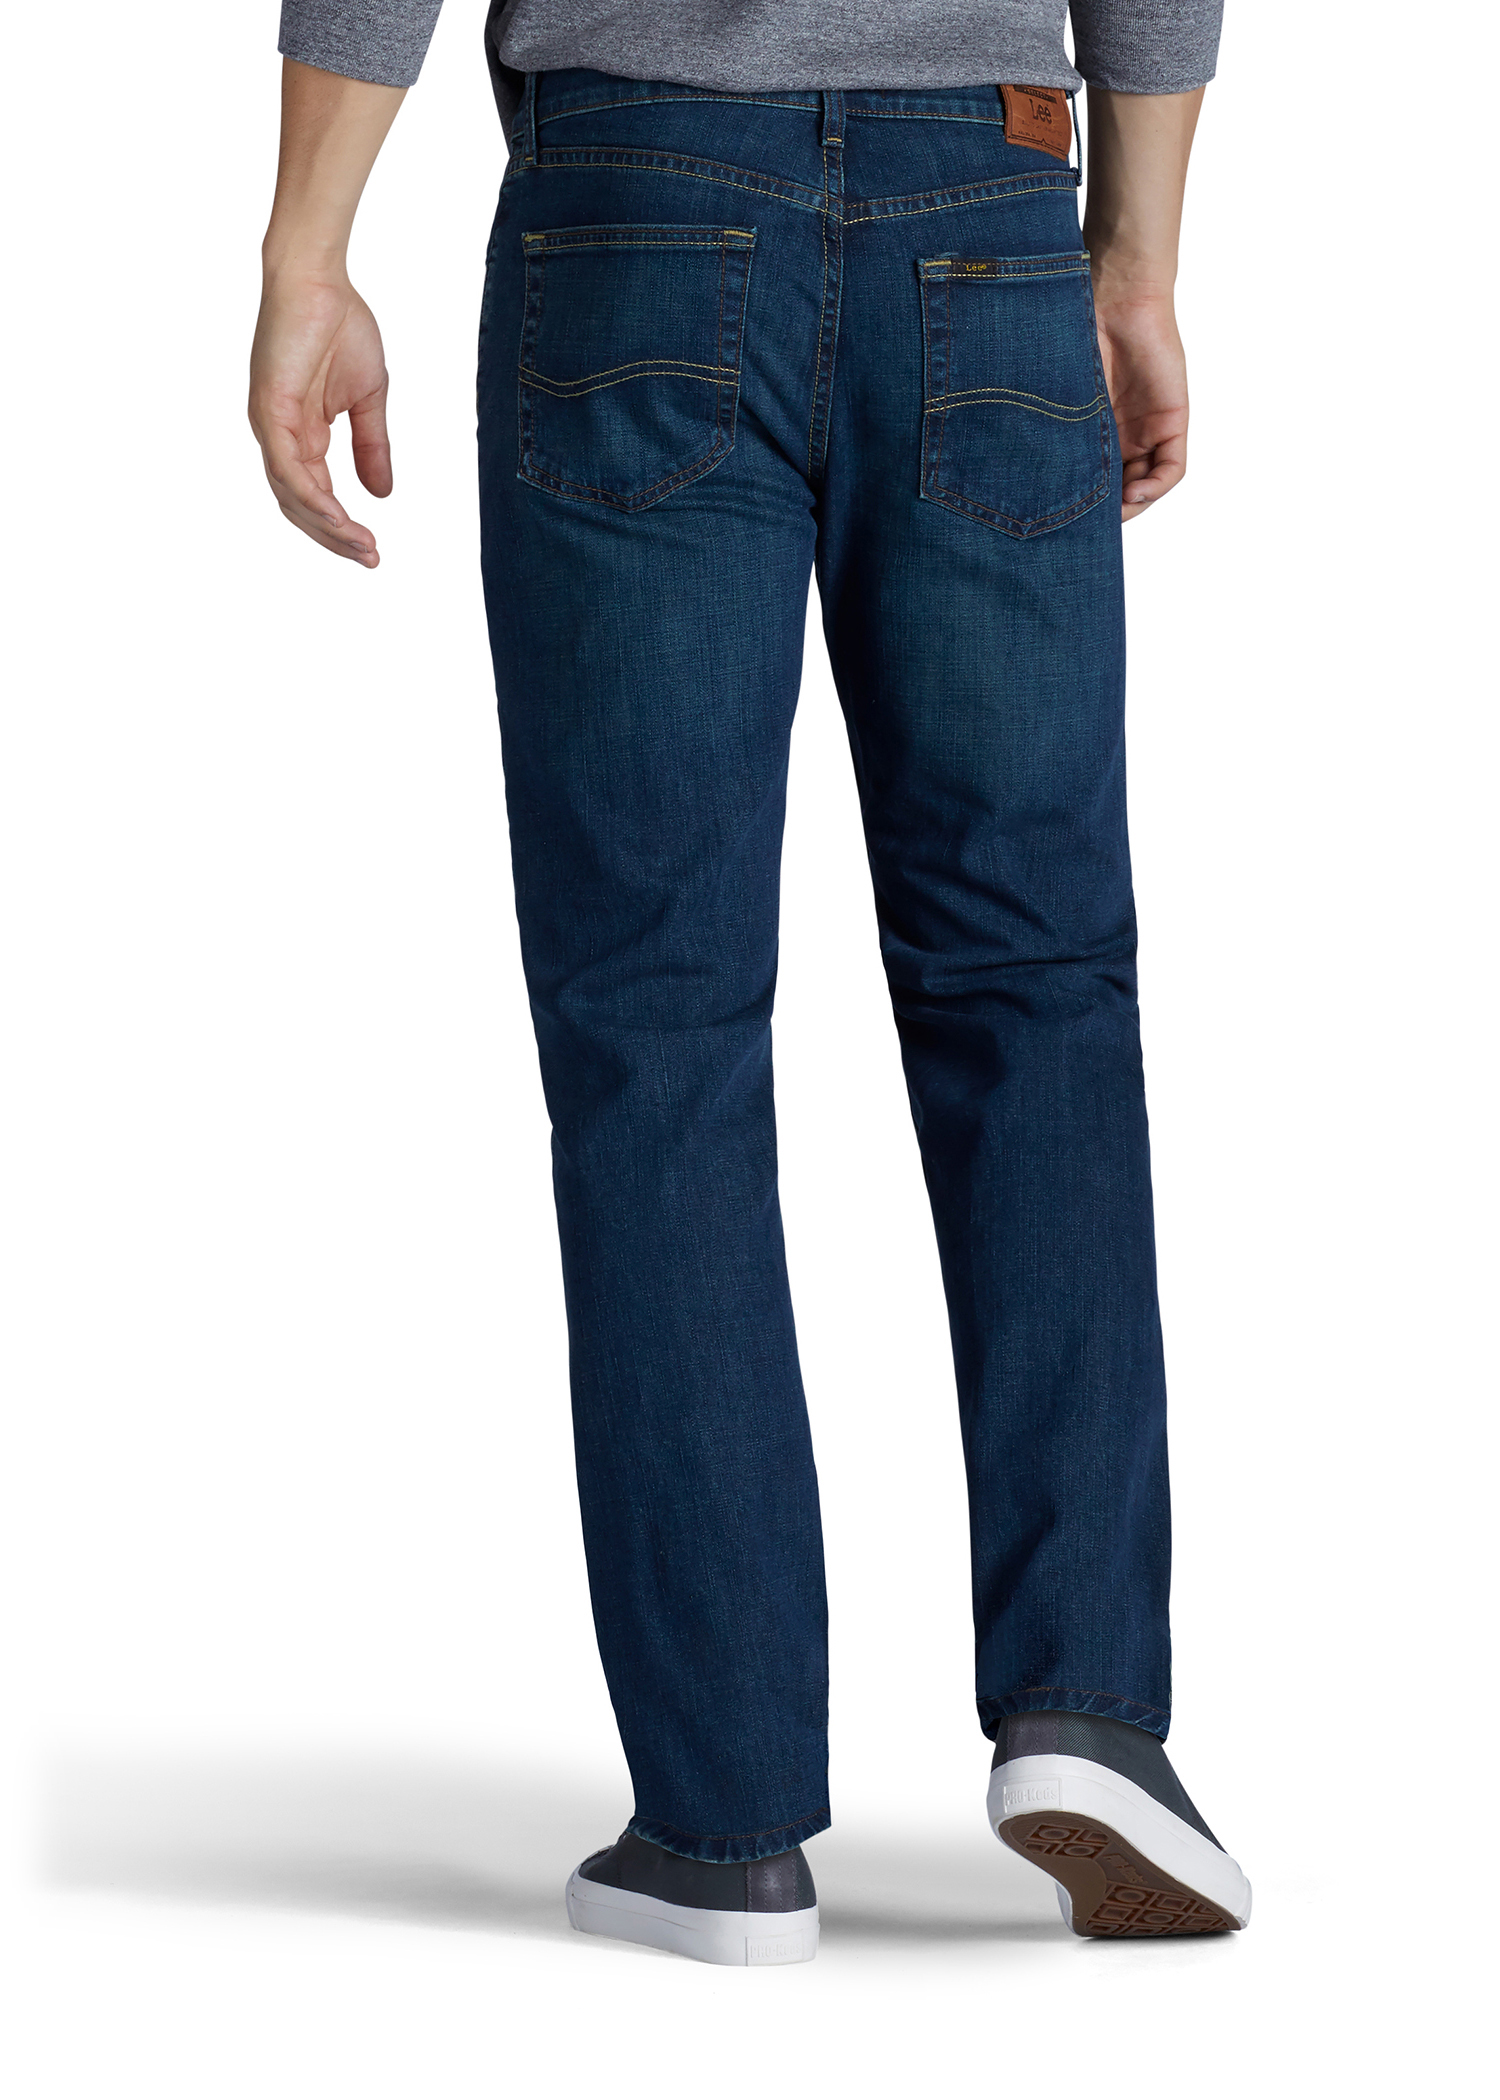 Lee Men's Premium Select Classic Fit Jeans - image 2 of 4